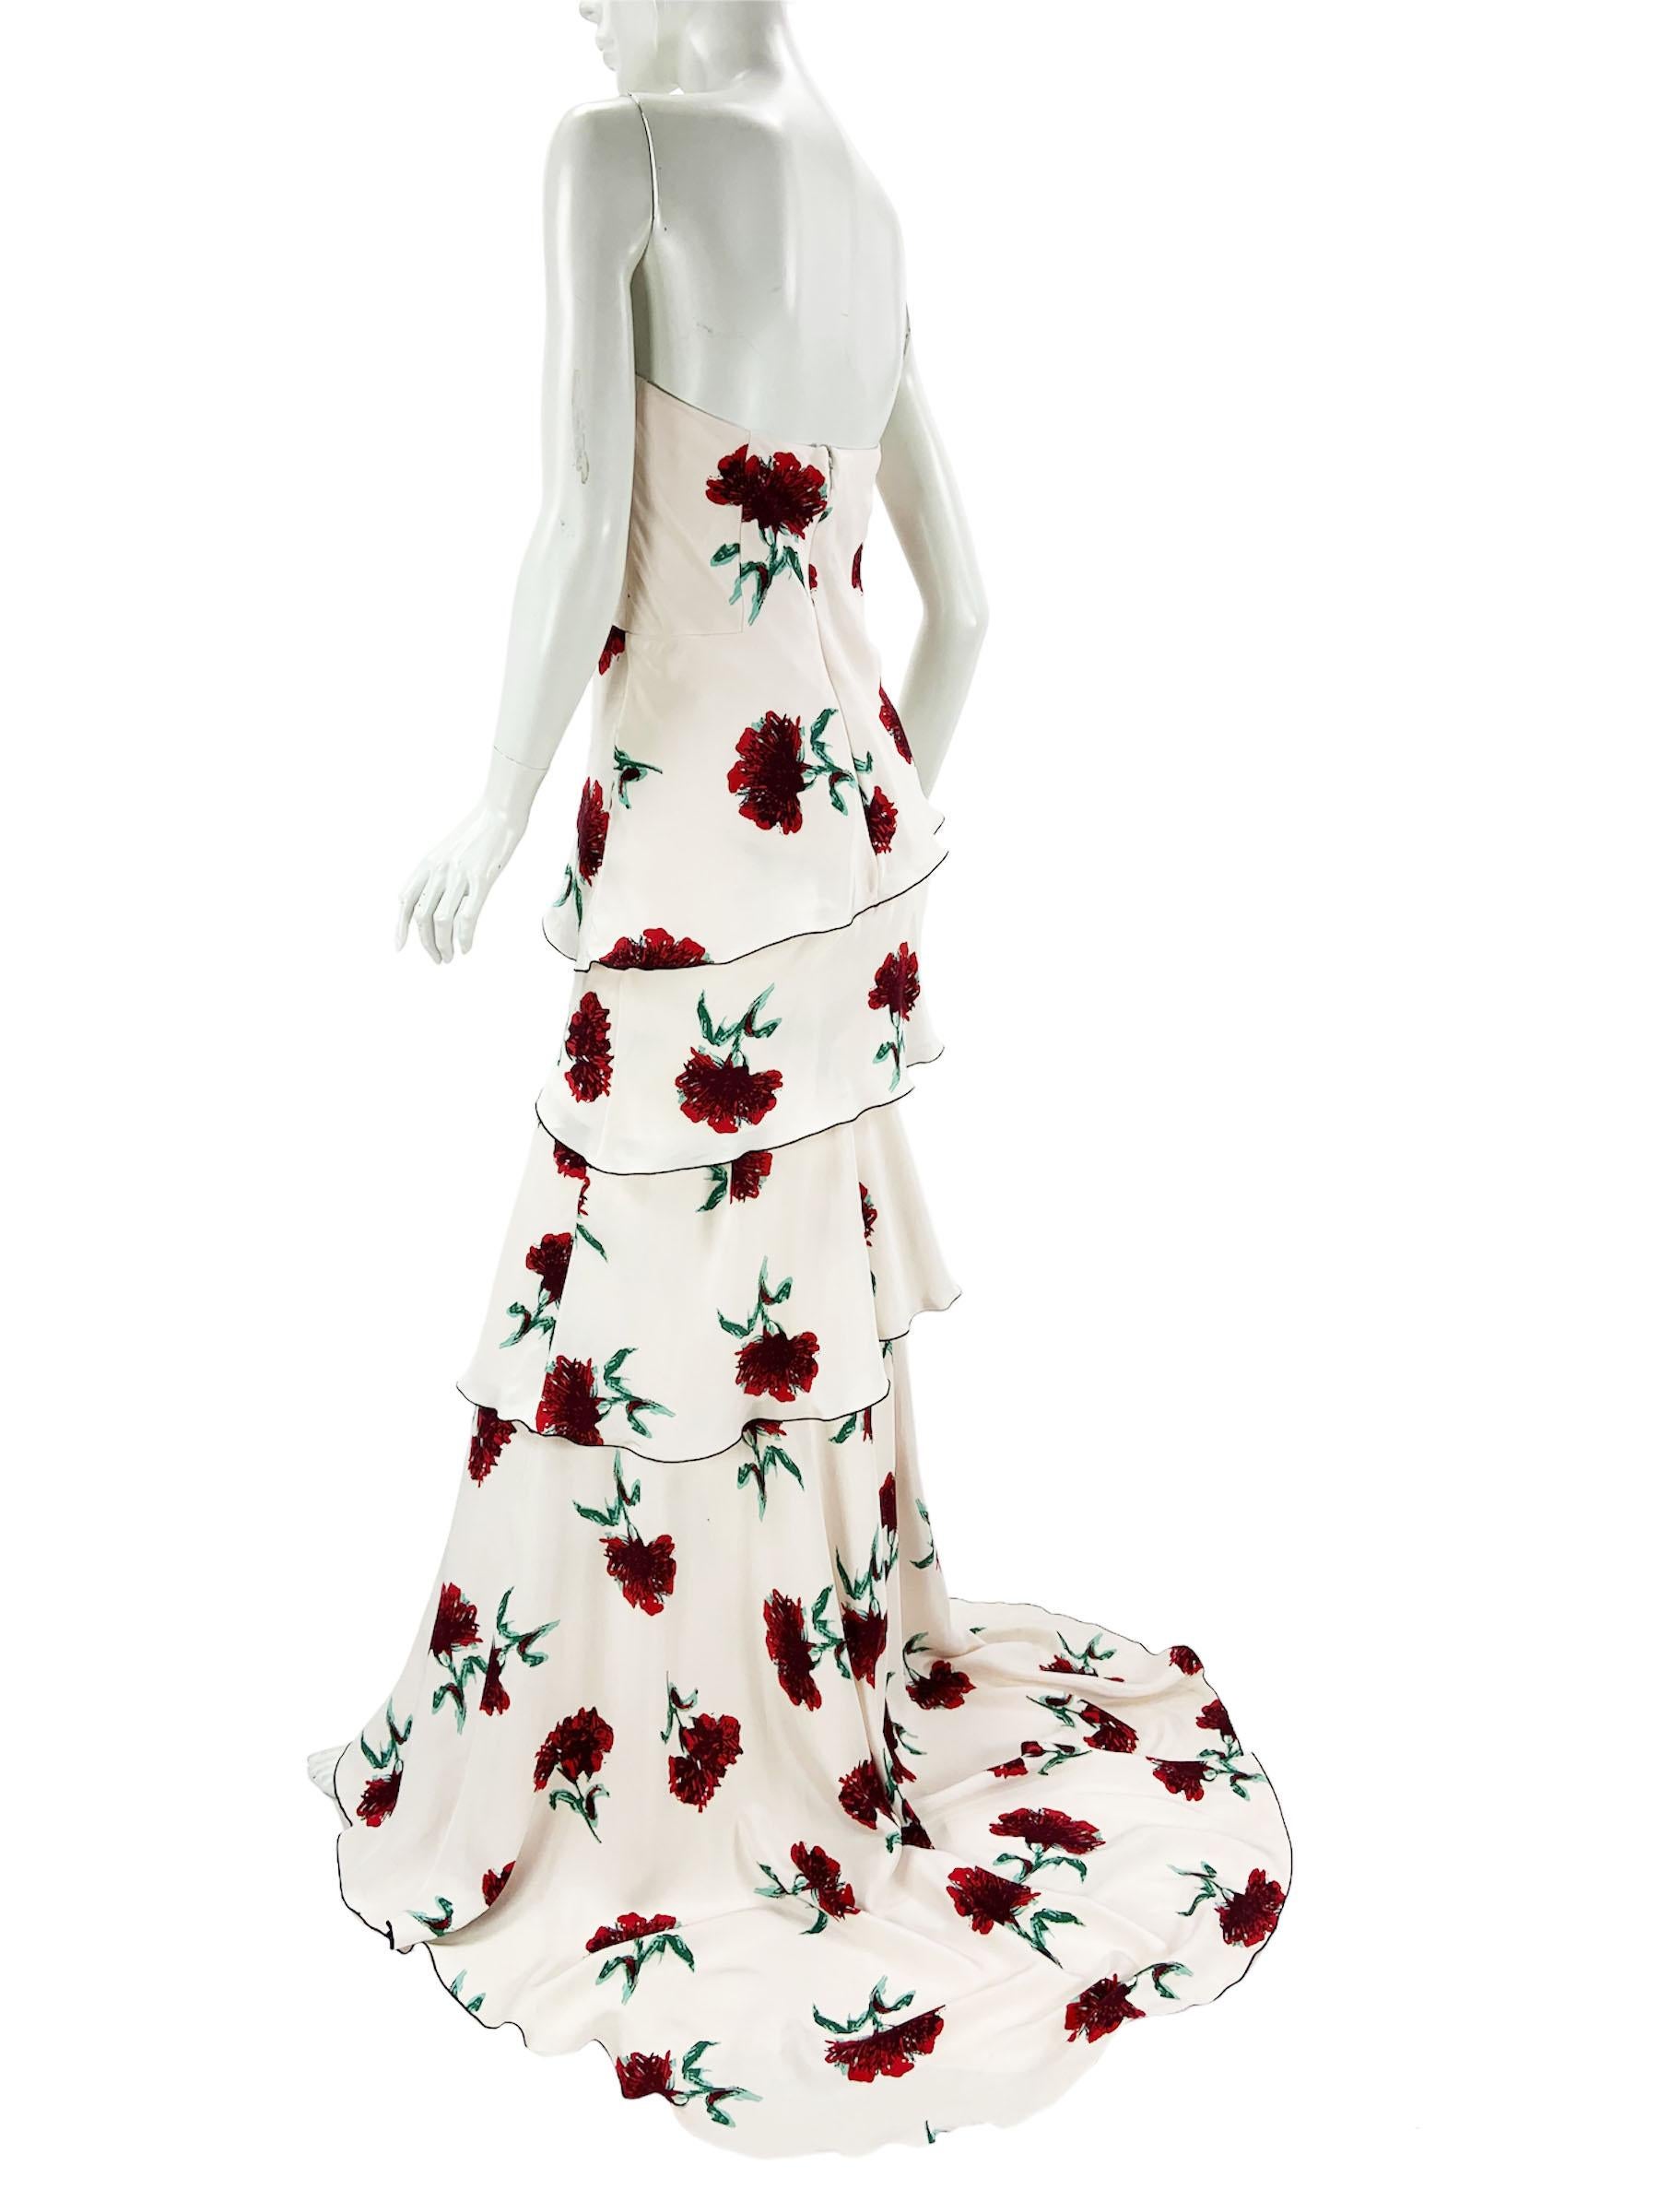 Oscar de la Renta Runway Silk White Floral Print Layered Corset Dress Gown US 6 For Sale 1